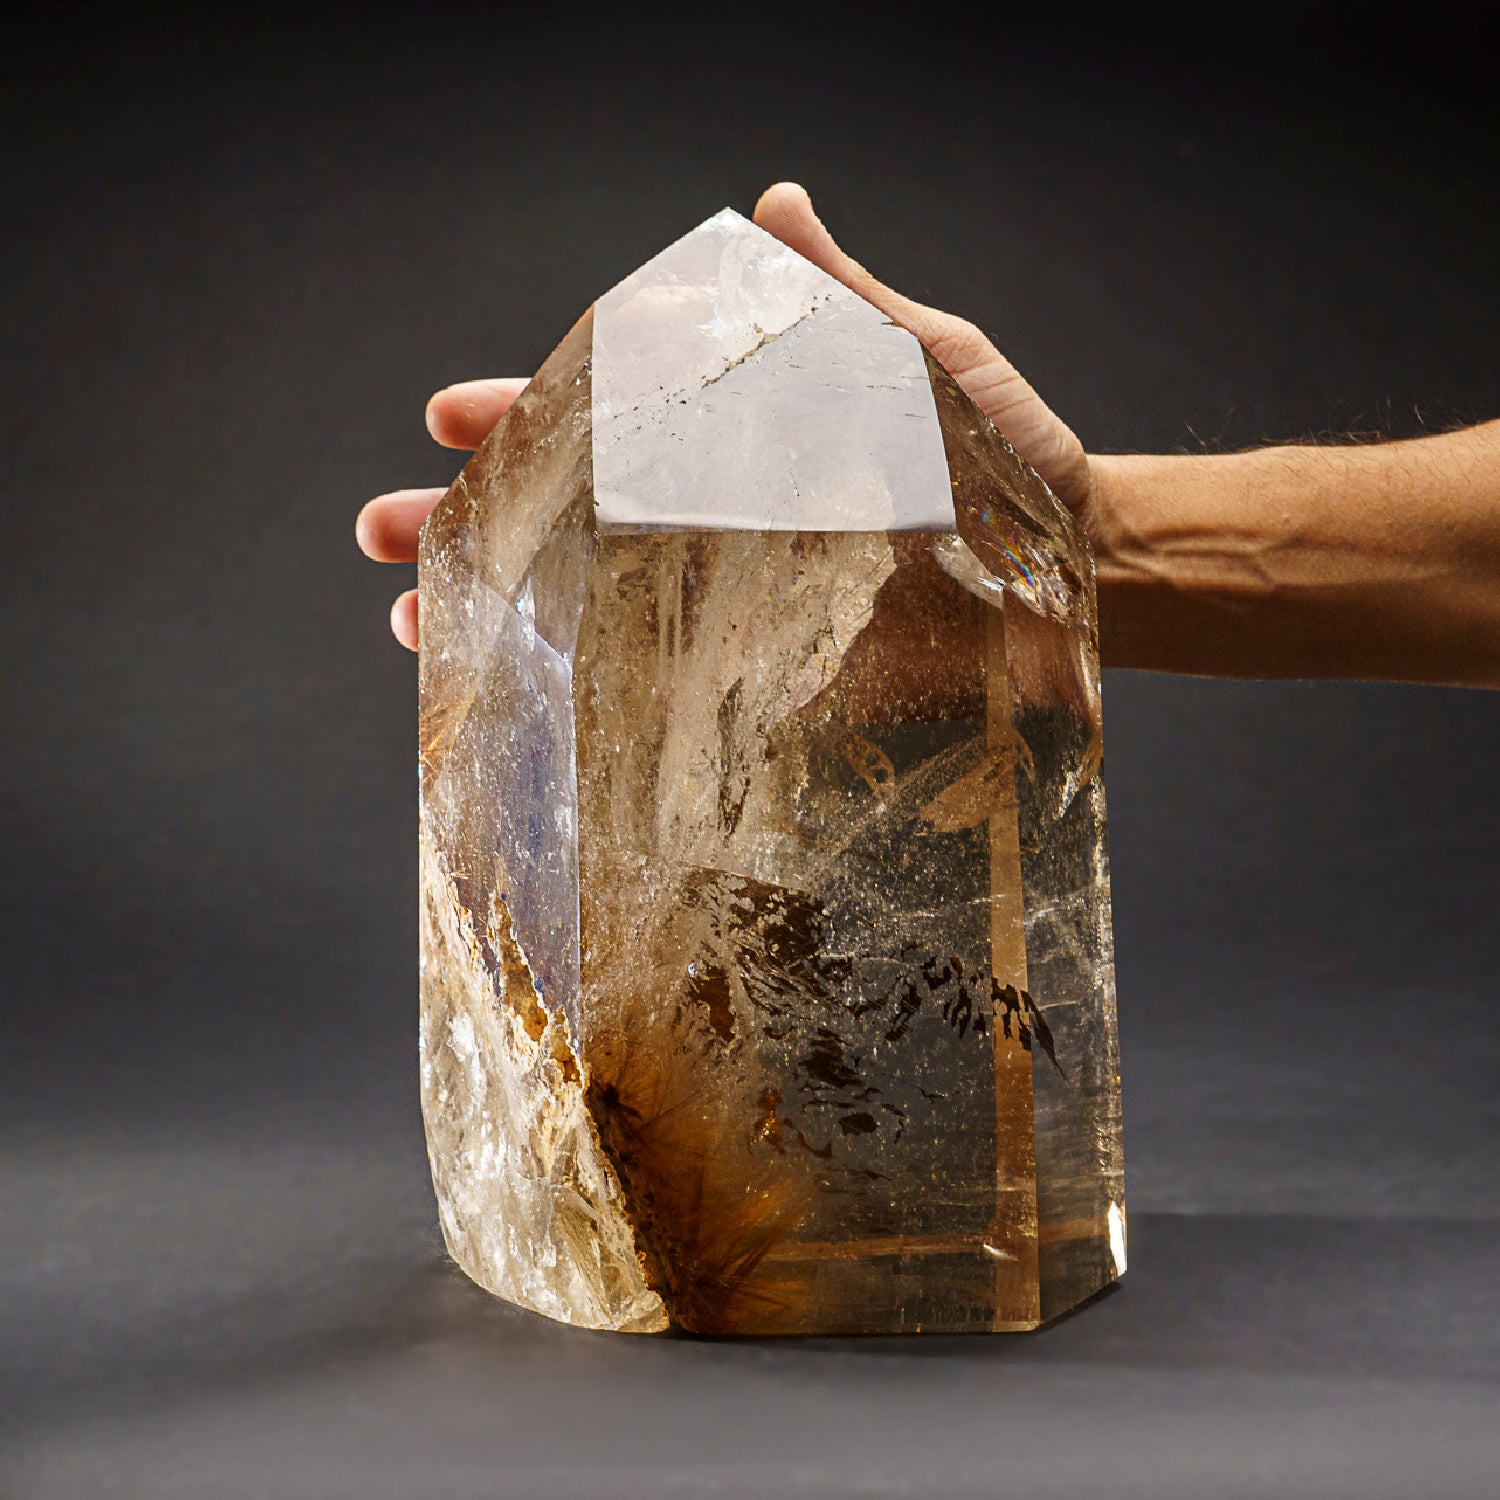 Genuine Large Smoky Quartz Crystal Point From Brazil (17.5 lbs)